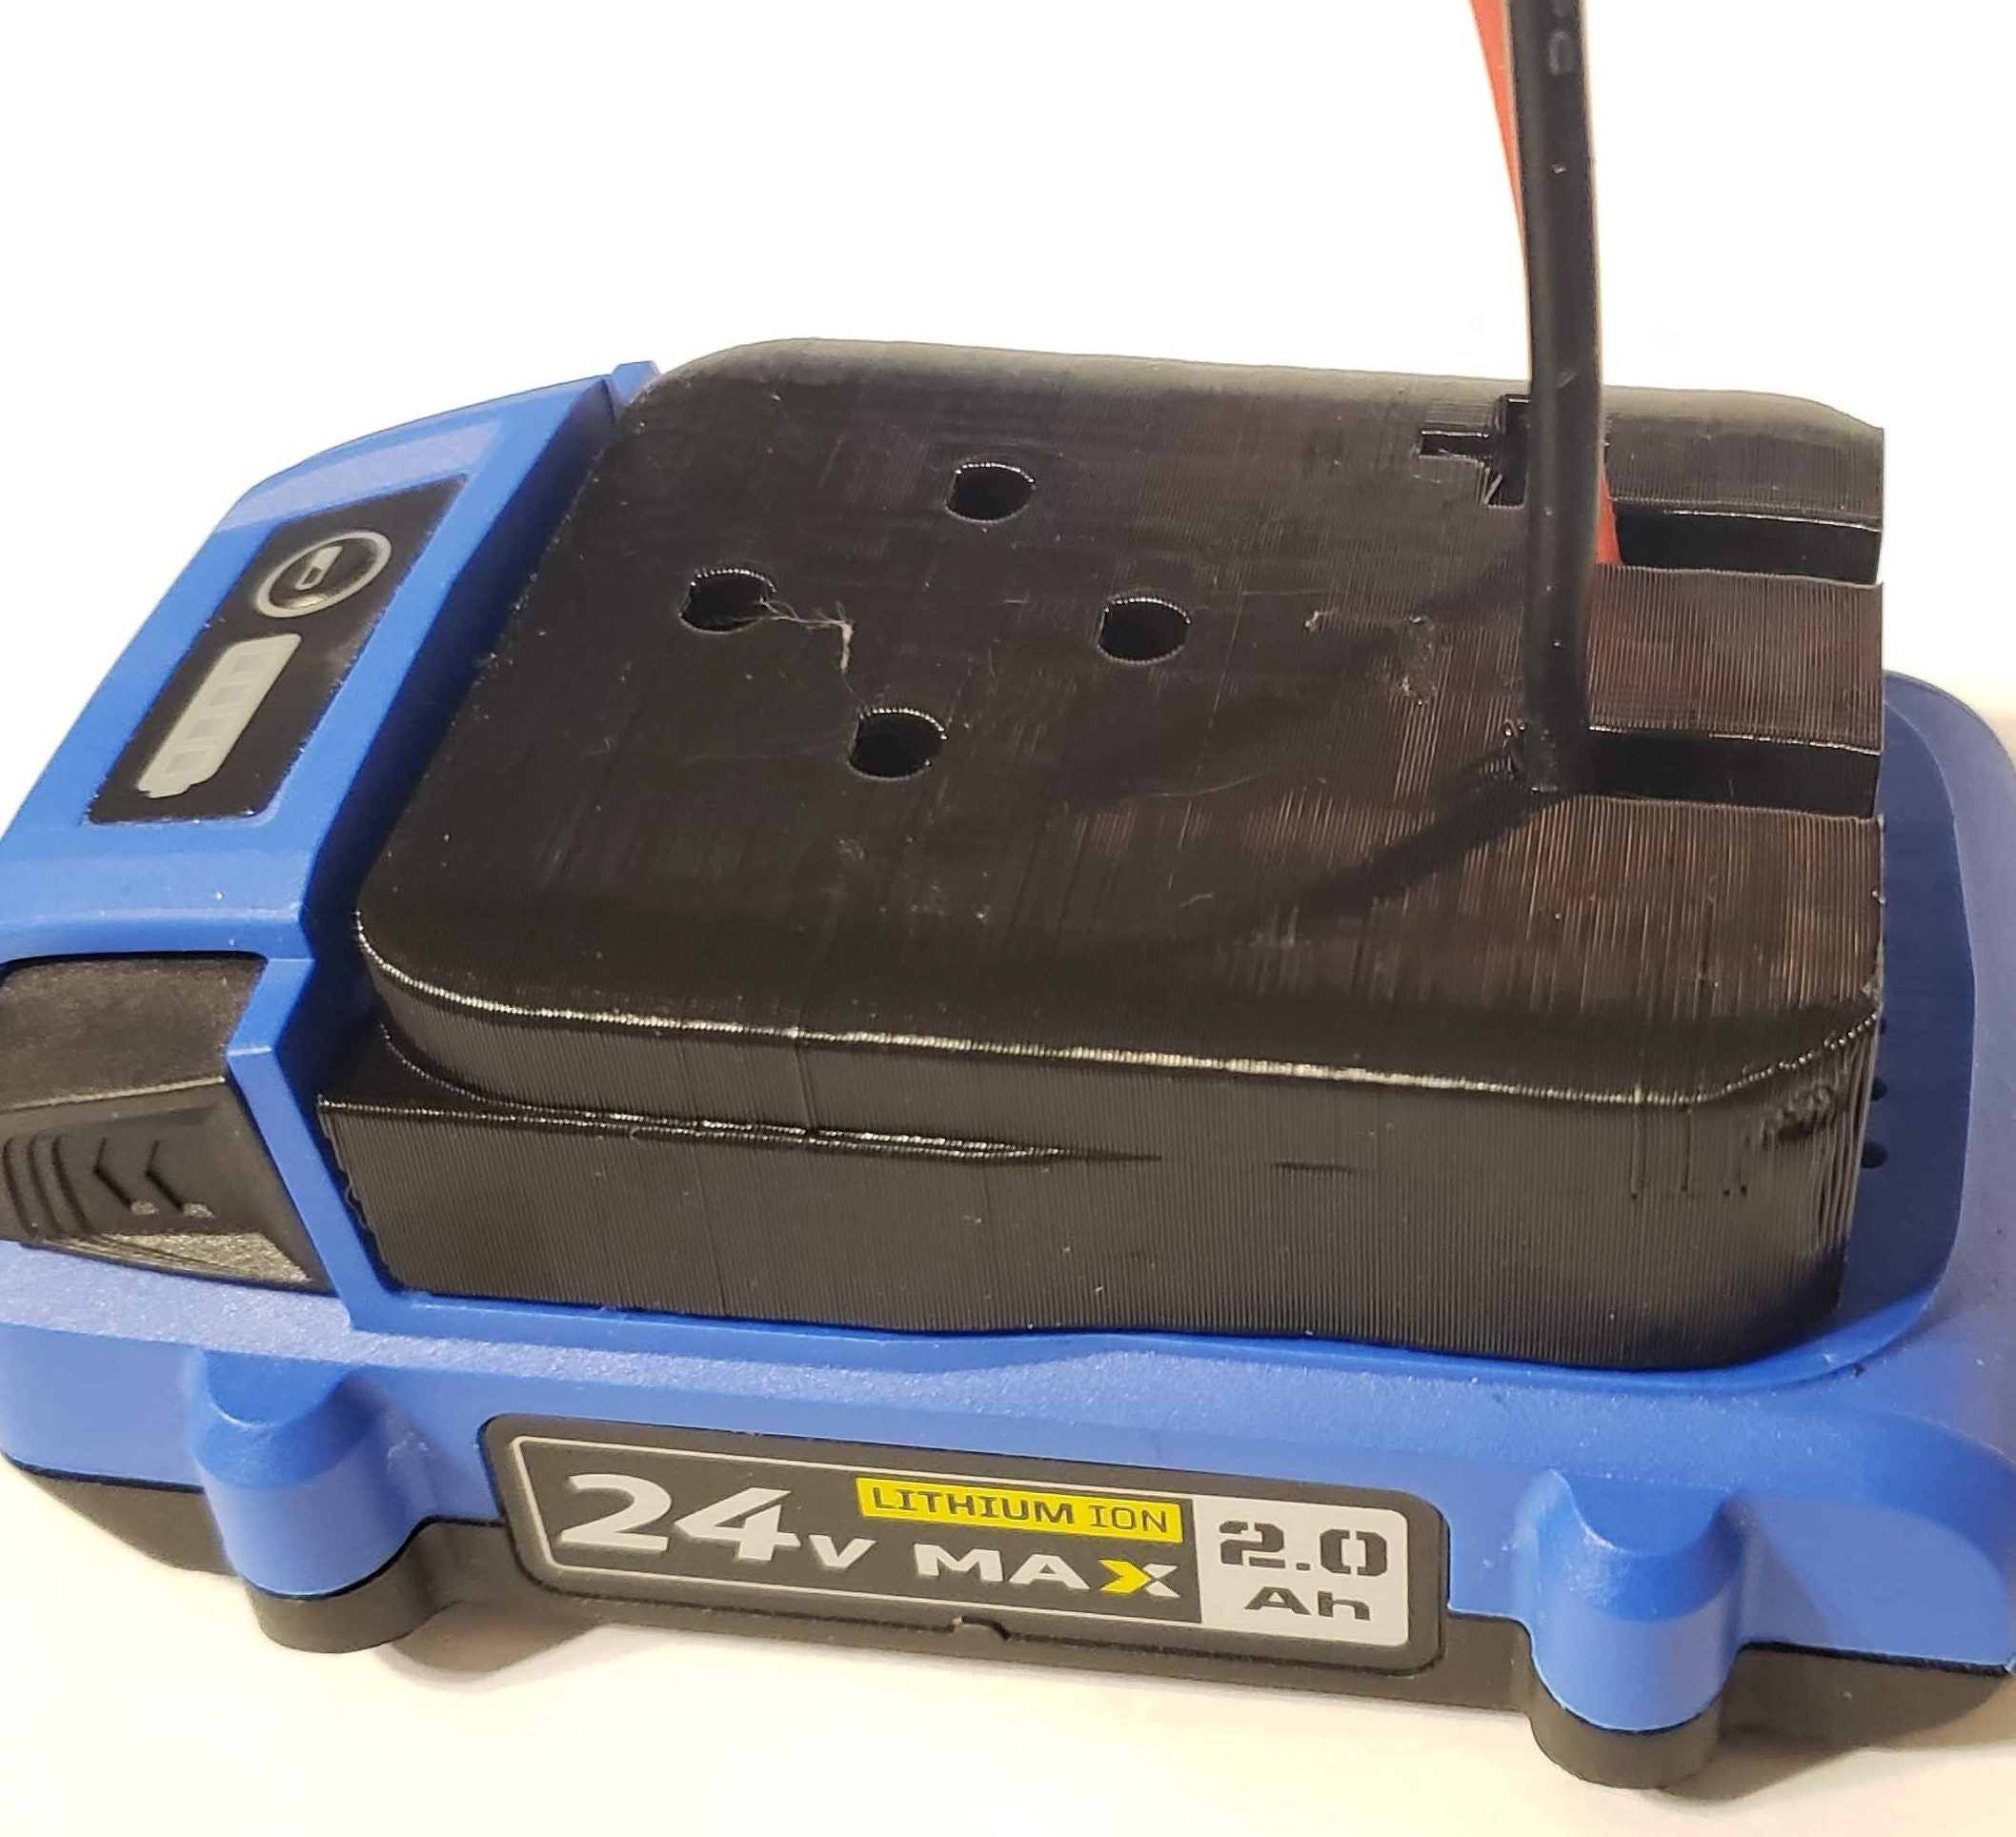 For KOBALT 24v Battery Adapter For KOBALT To Porter Cable/ Black+Decker/Stanley  Toois Converter (excluding tools and batteries)